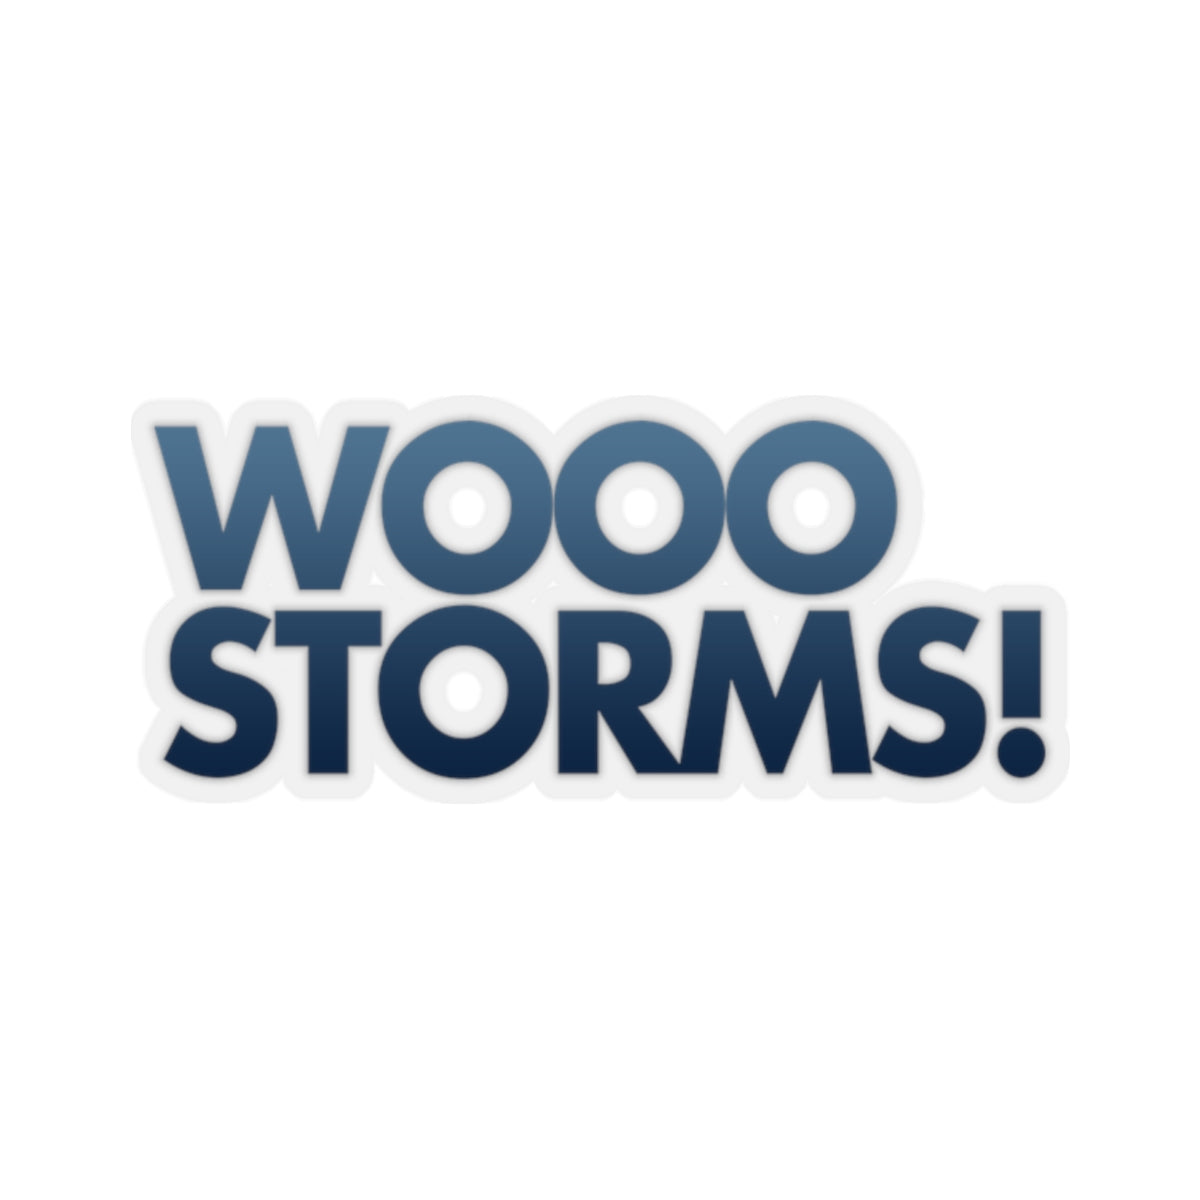 Wooo Storms! Sticker 